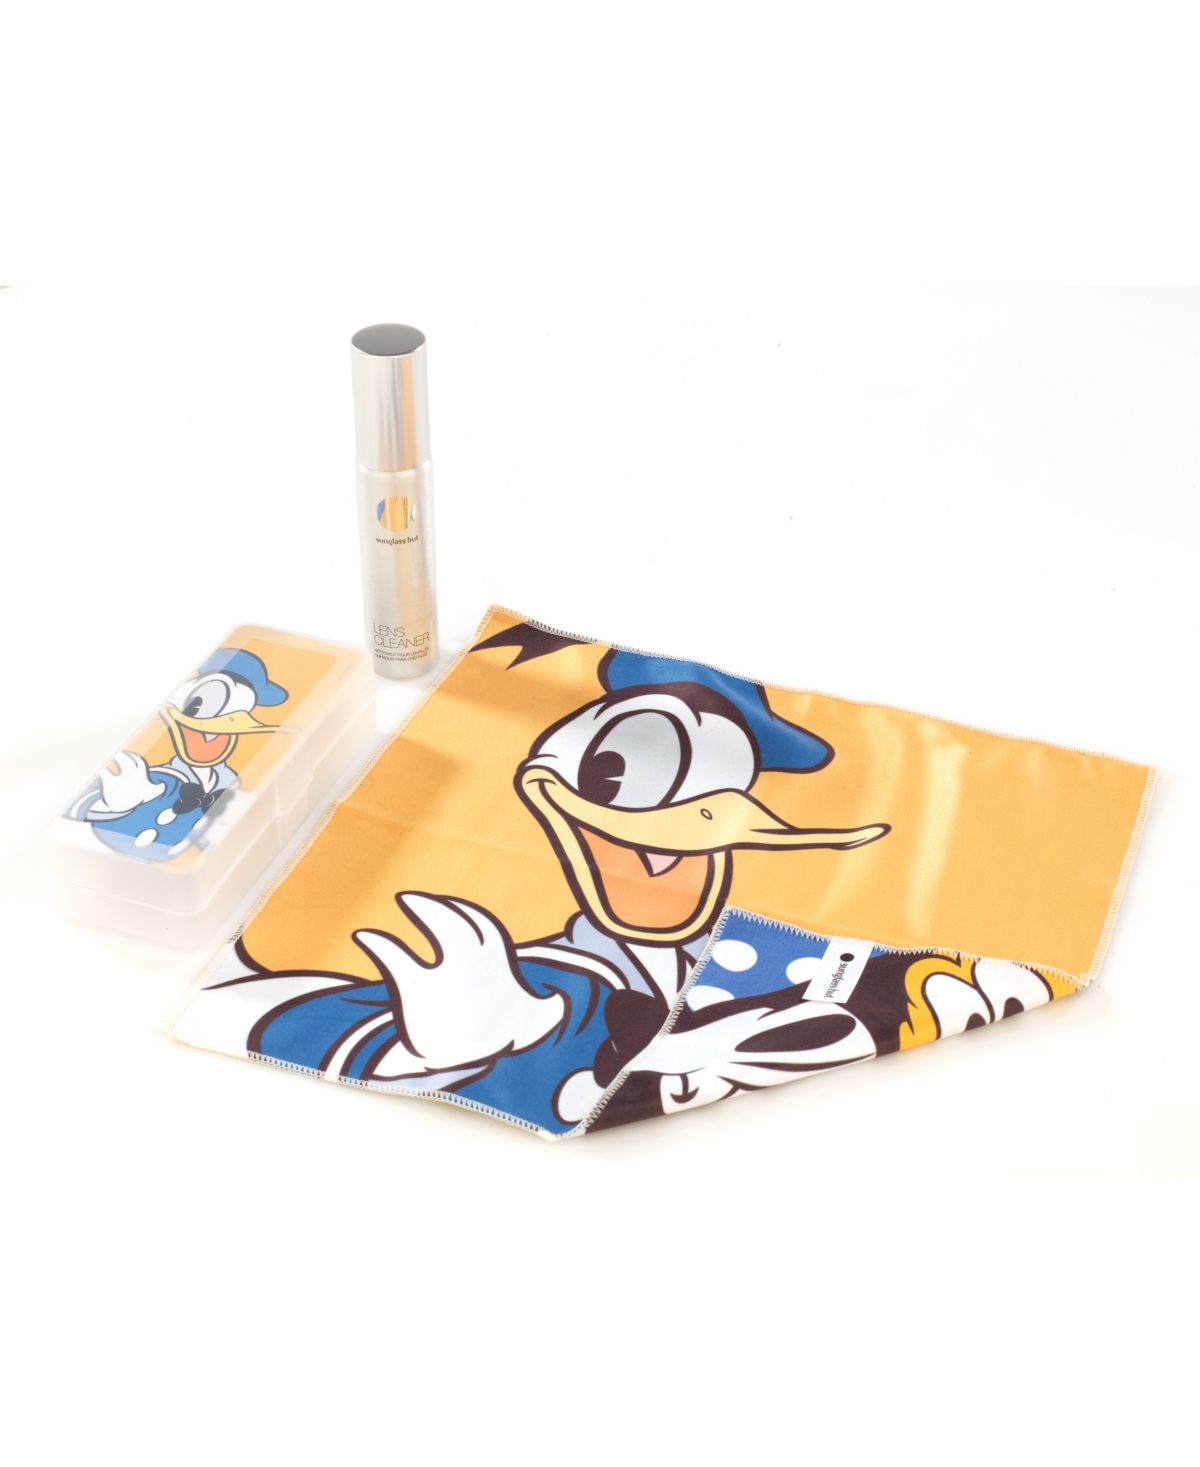 Sunglass Hut Disney Donald Duck Cleaning Kit, AHU0006CK - Multicolor